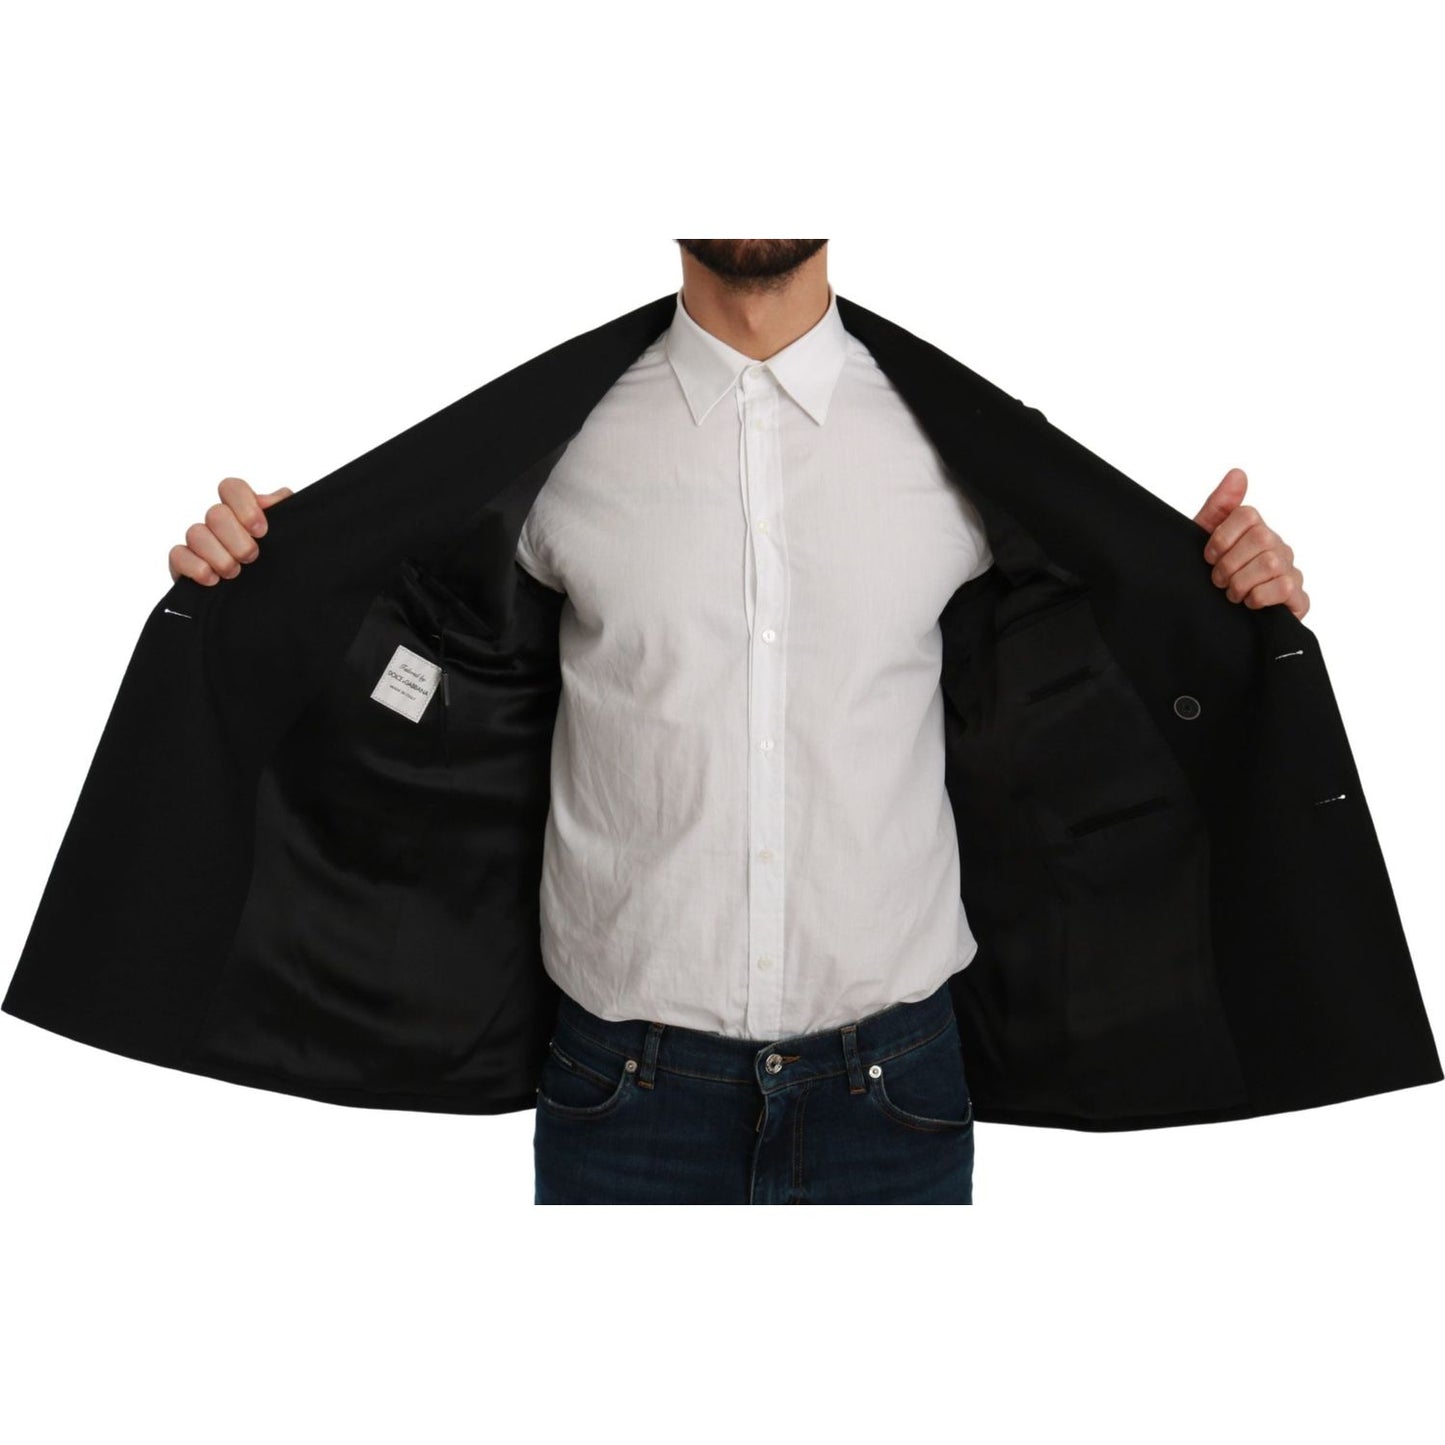 Dolce & Gabbana Elegant Black Slim Fit Formal Blazer black-slim-fit-jacket-coat-wool-blazer-1